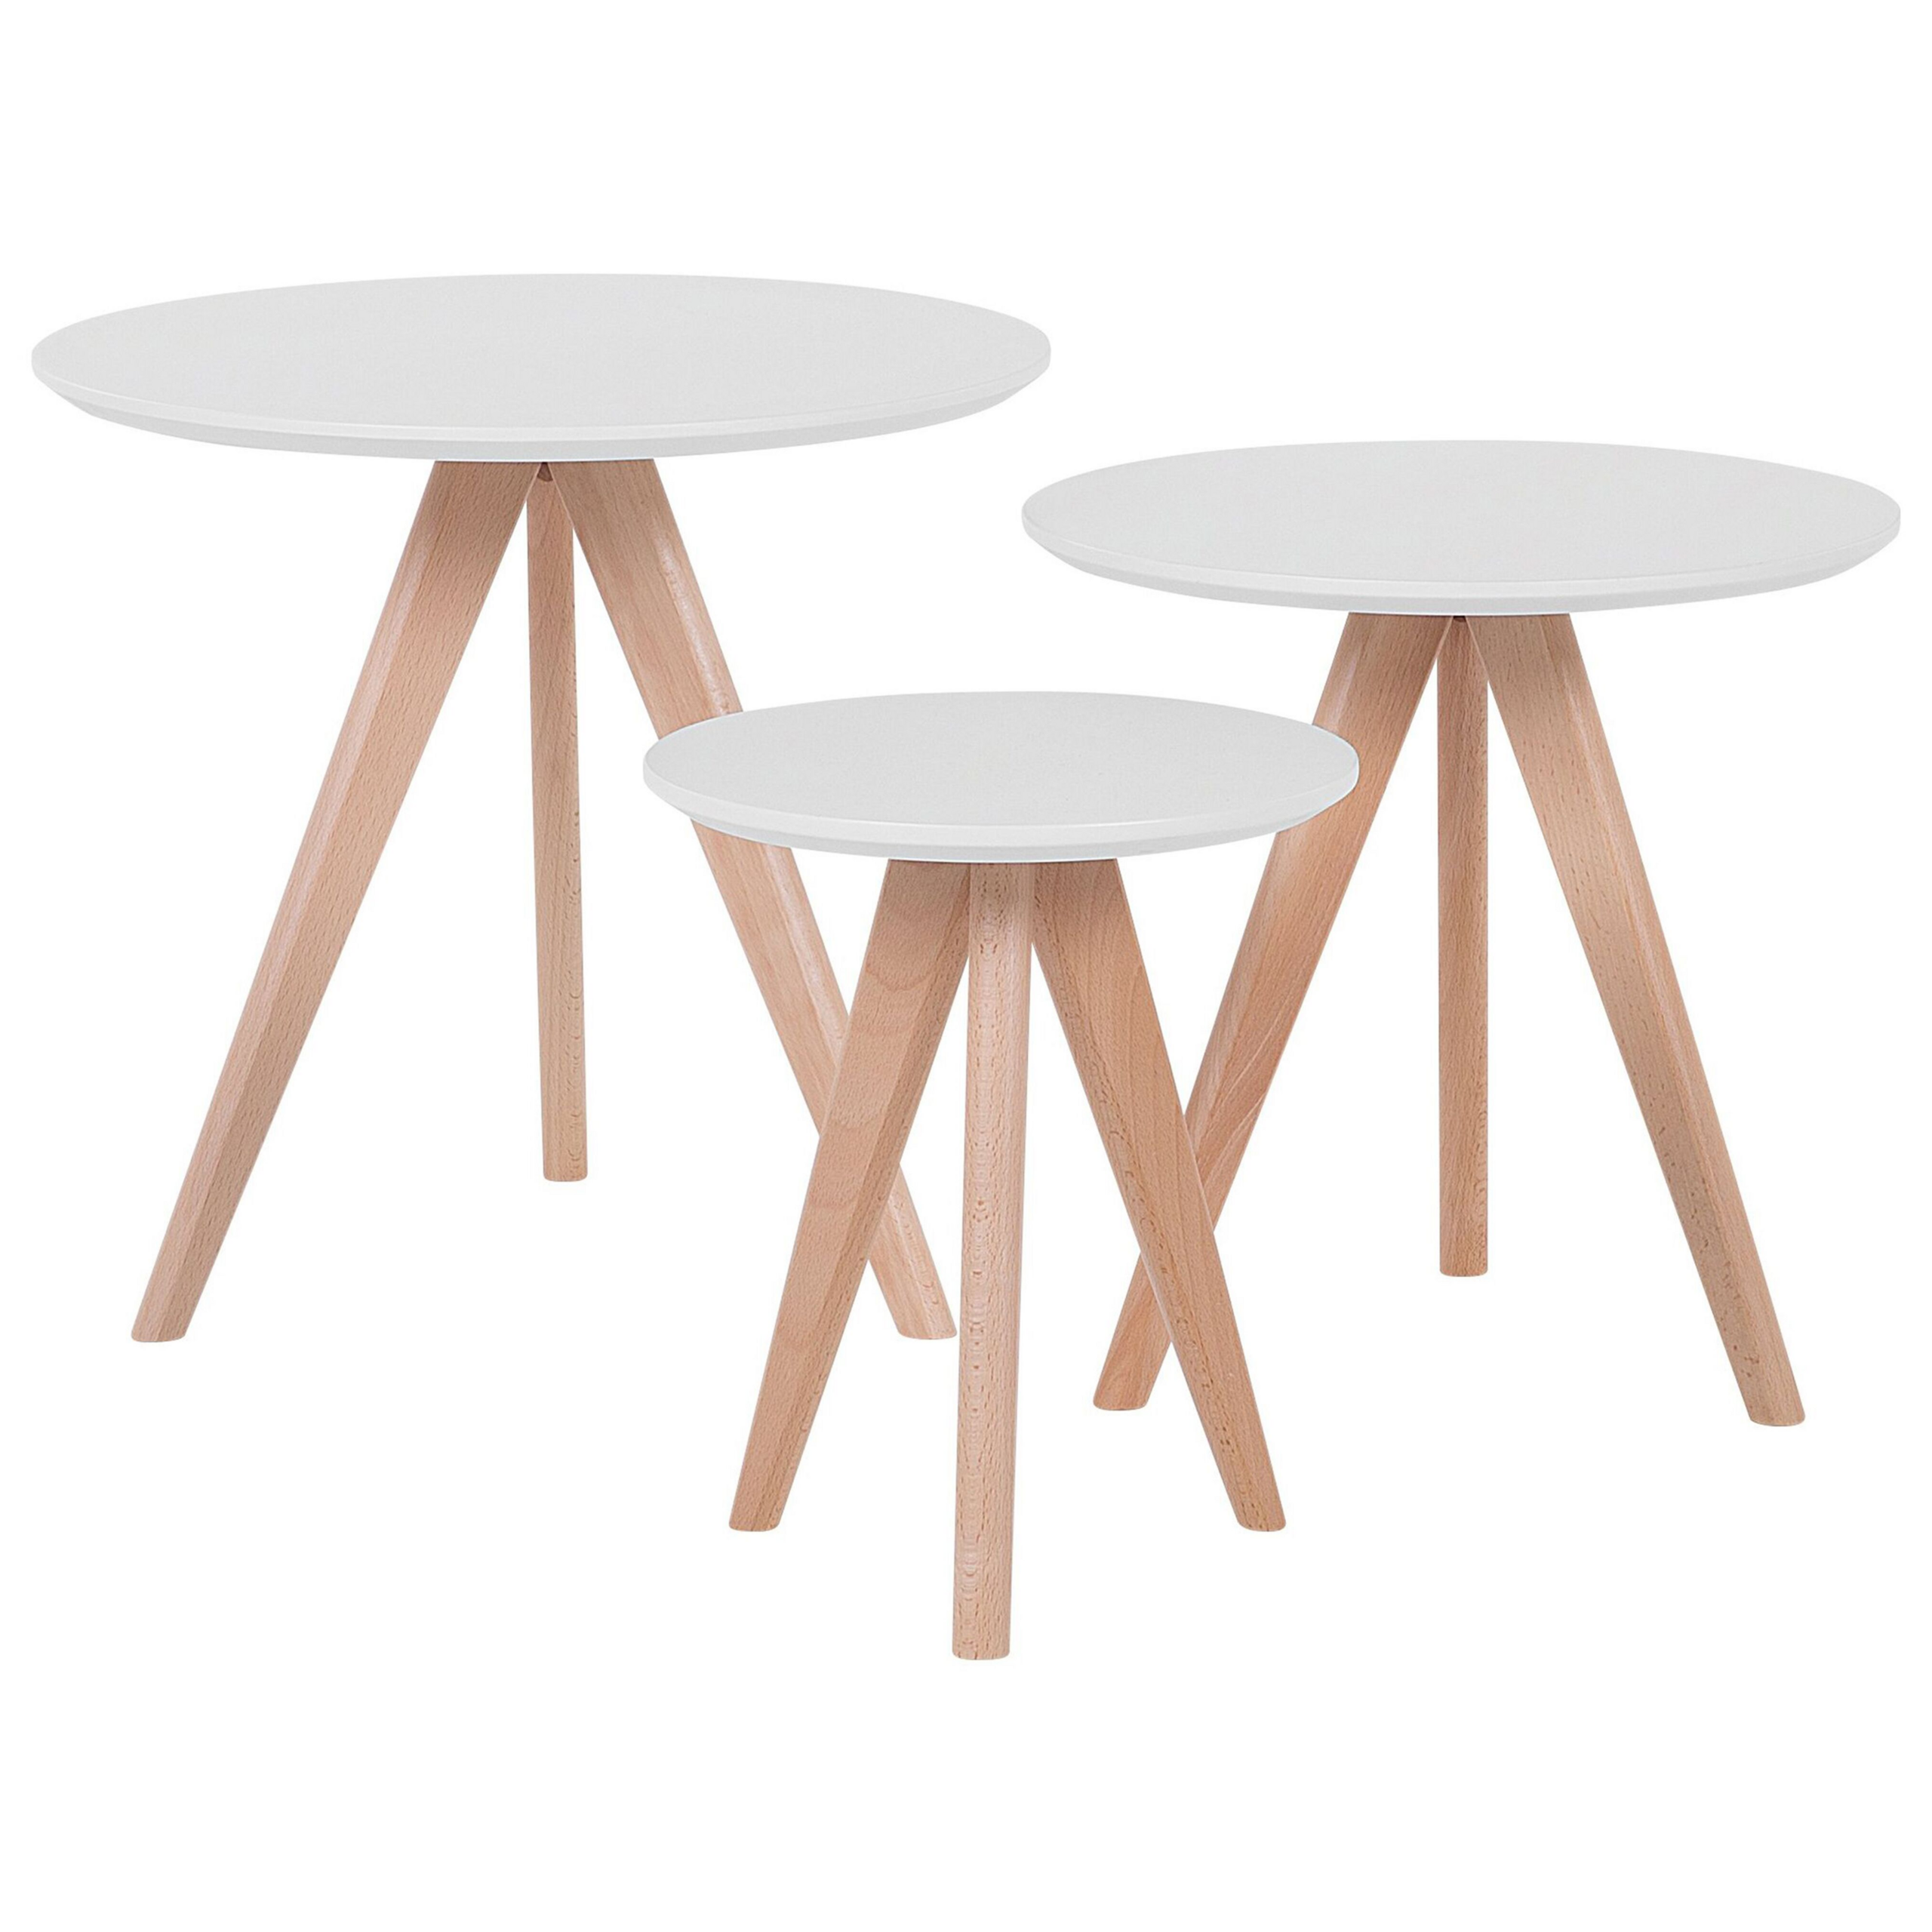 Beliani Nest of 3 Tables White Top Light Wood Tripod Base Scandinavian Style